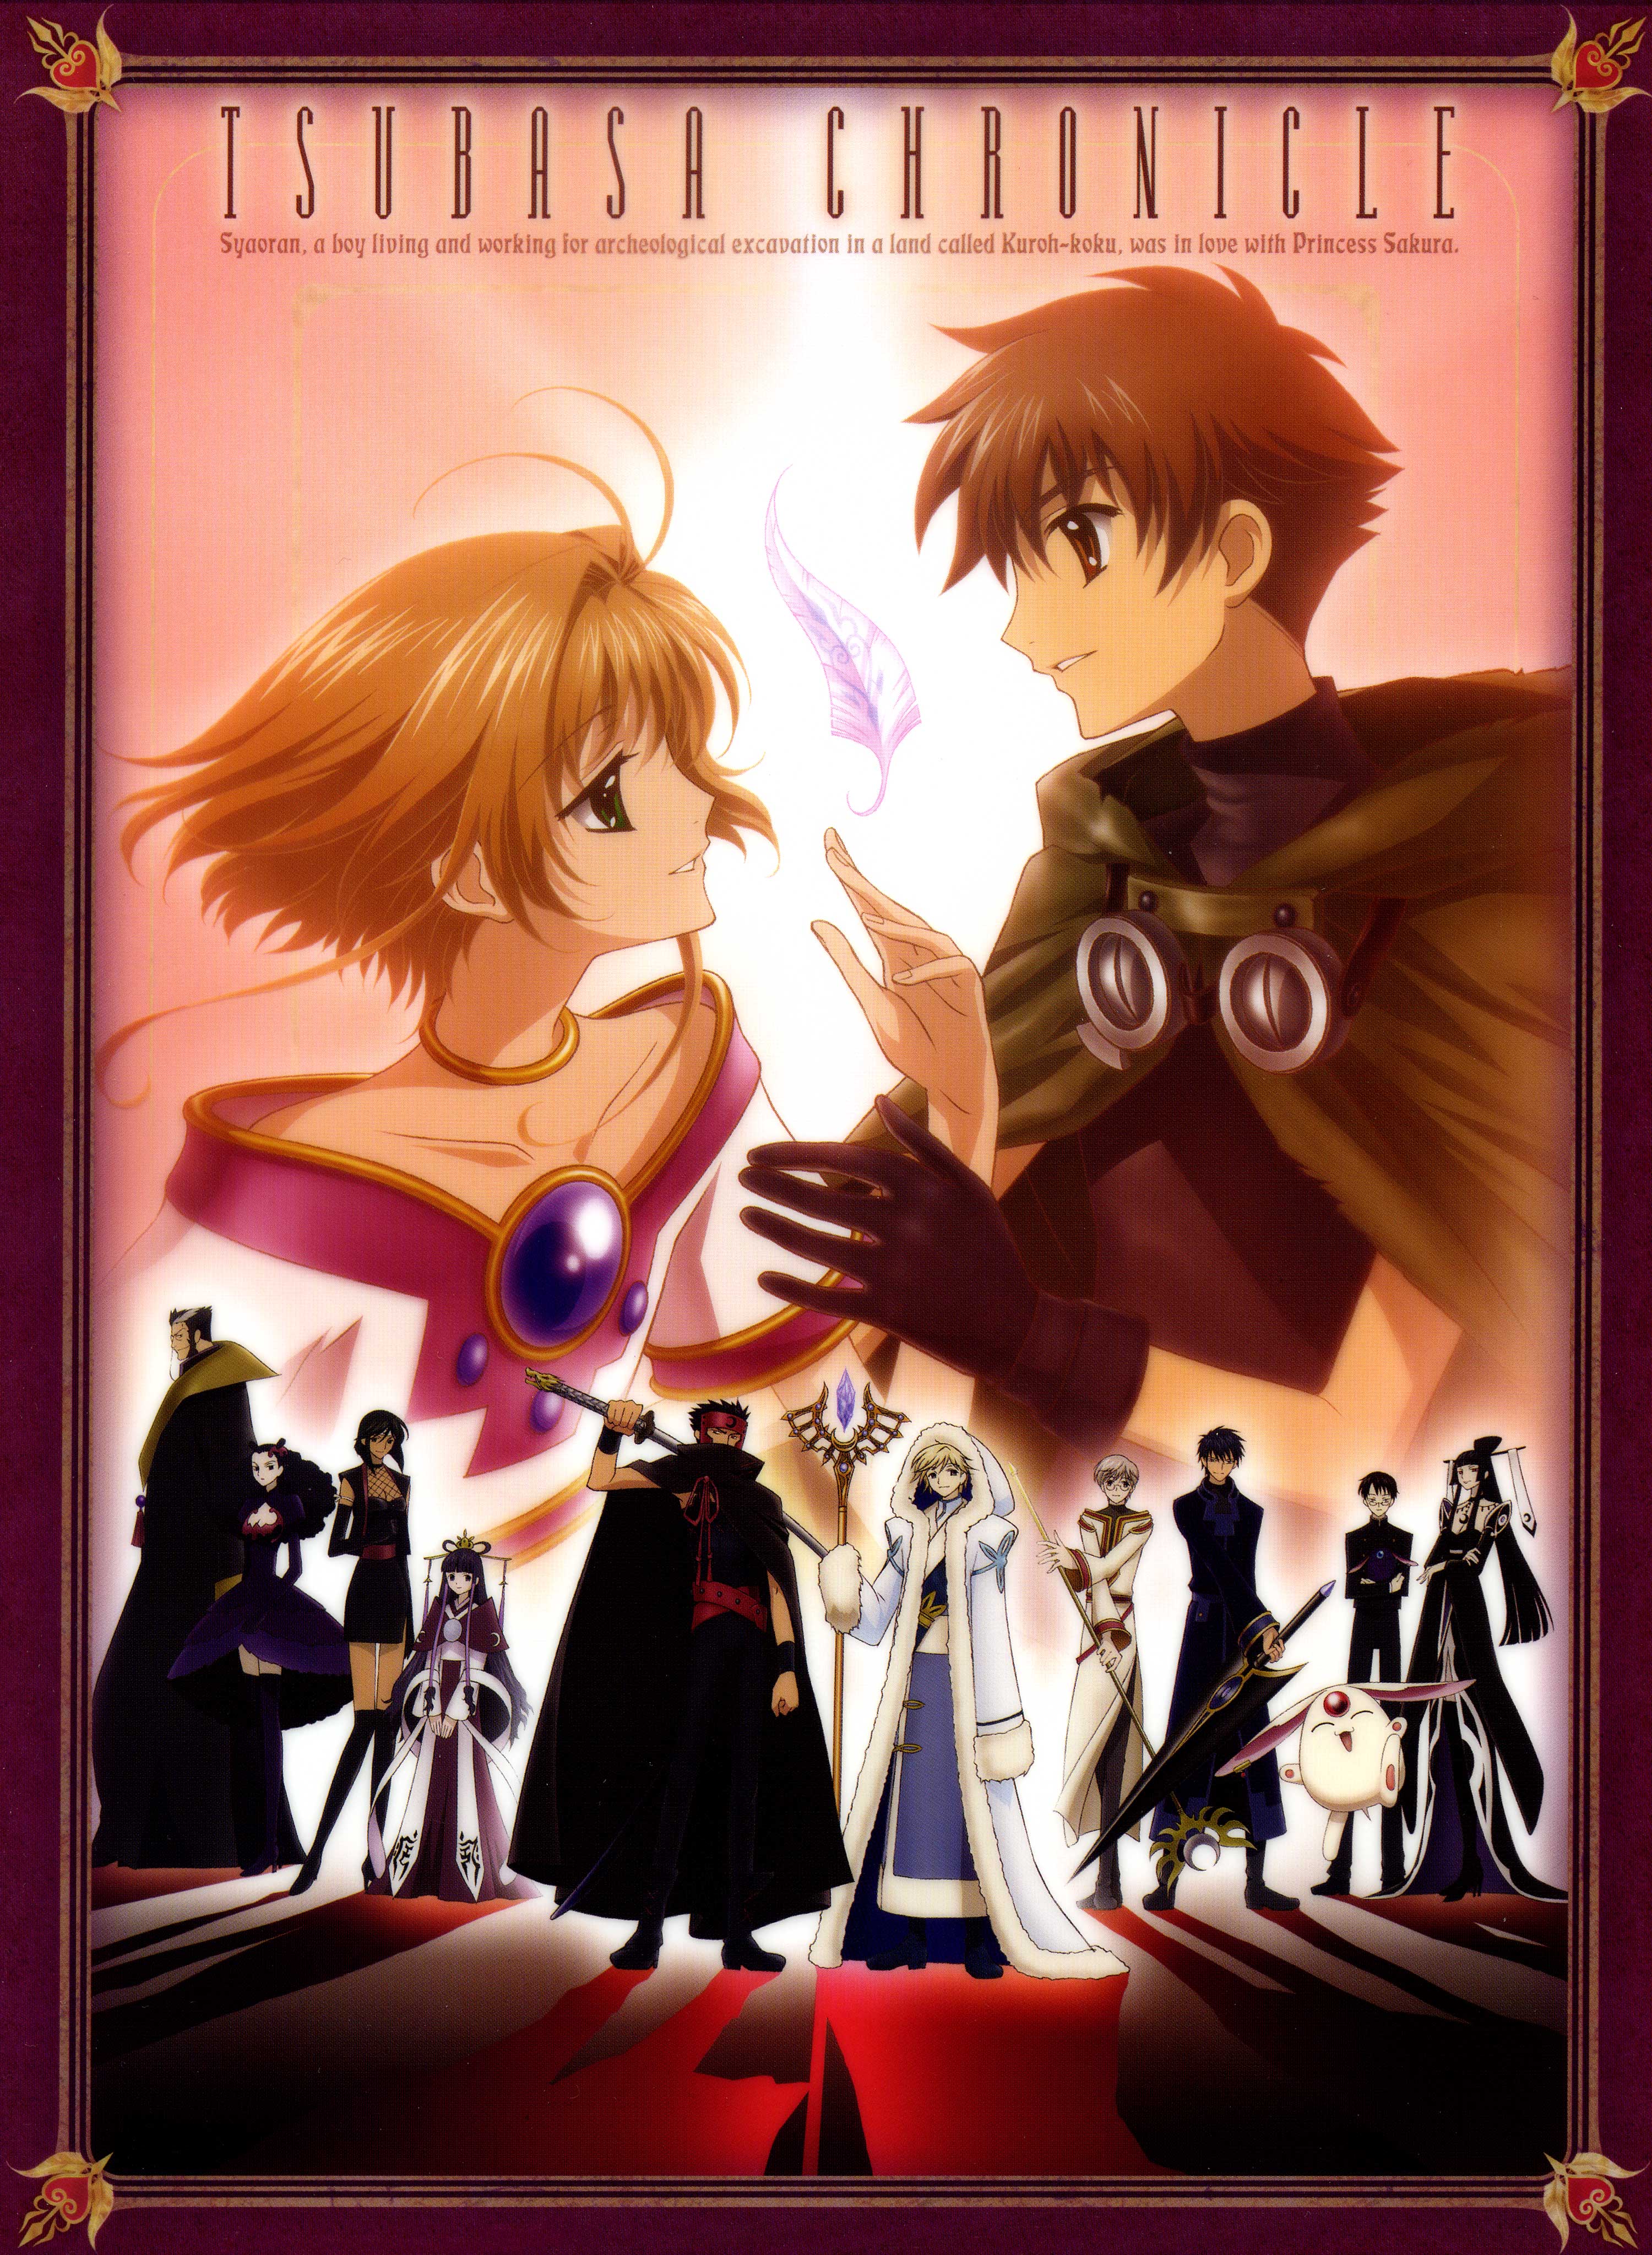 Anime: os universos do CLAMP unidos em Tsubasa Reservoir Chronicle -  Netoin!